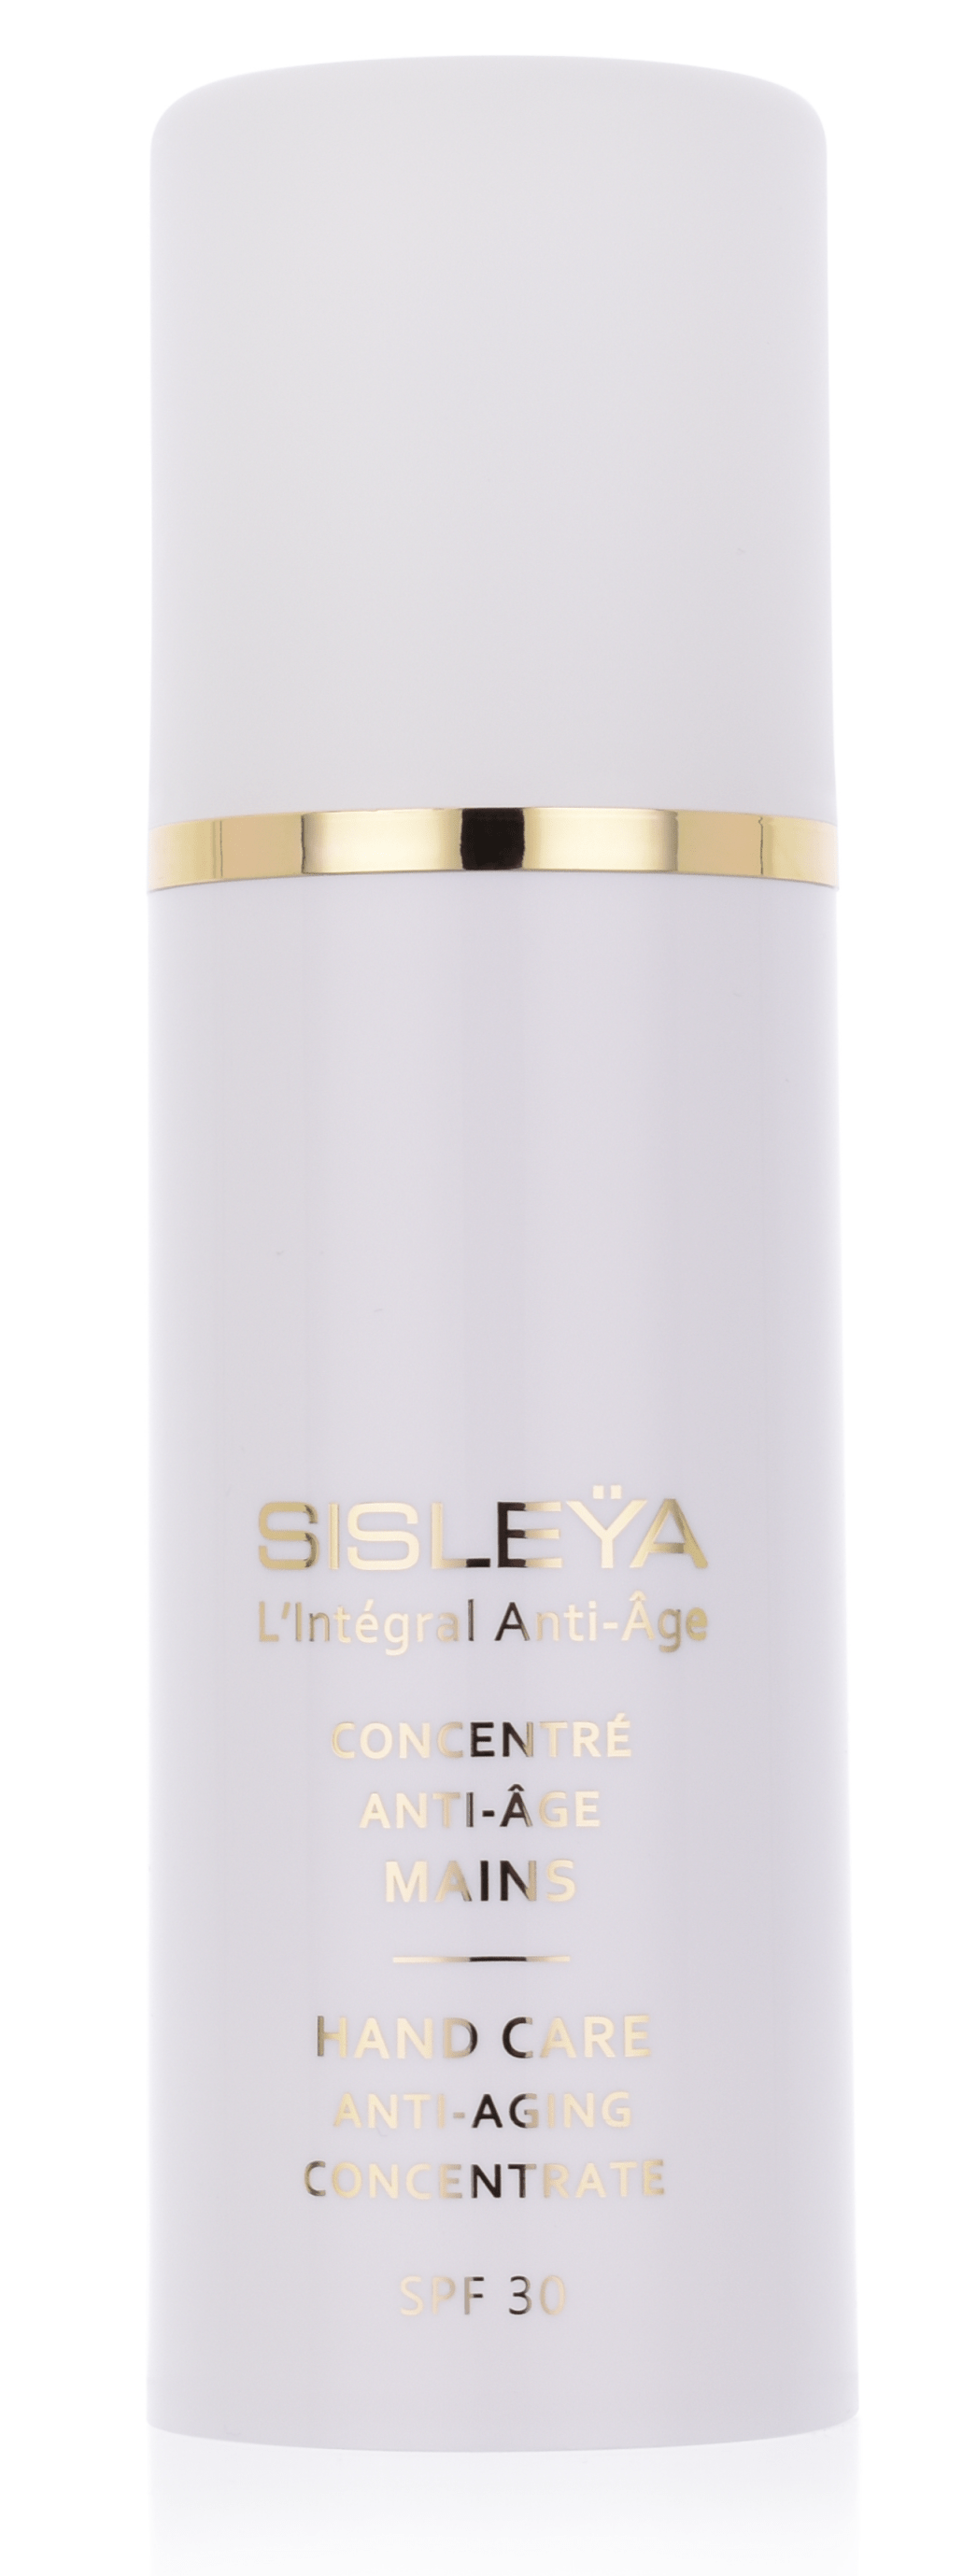 Sisley Sisleÿa - L'Intégral Anti-Âge Concentré Anti-Âge Mains 75 ml